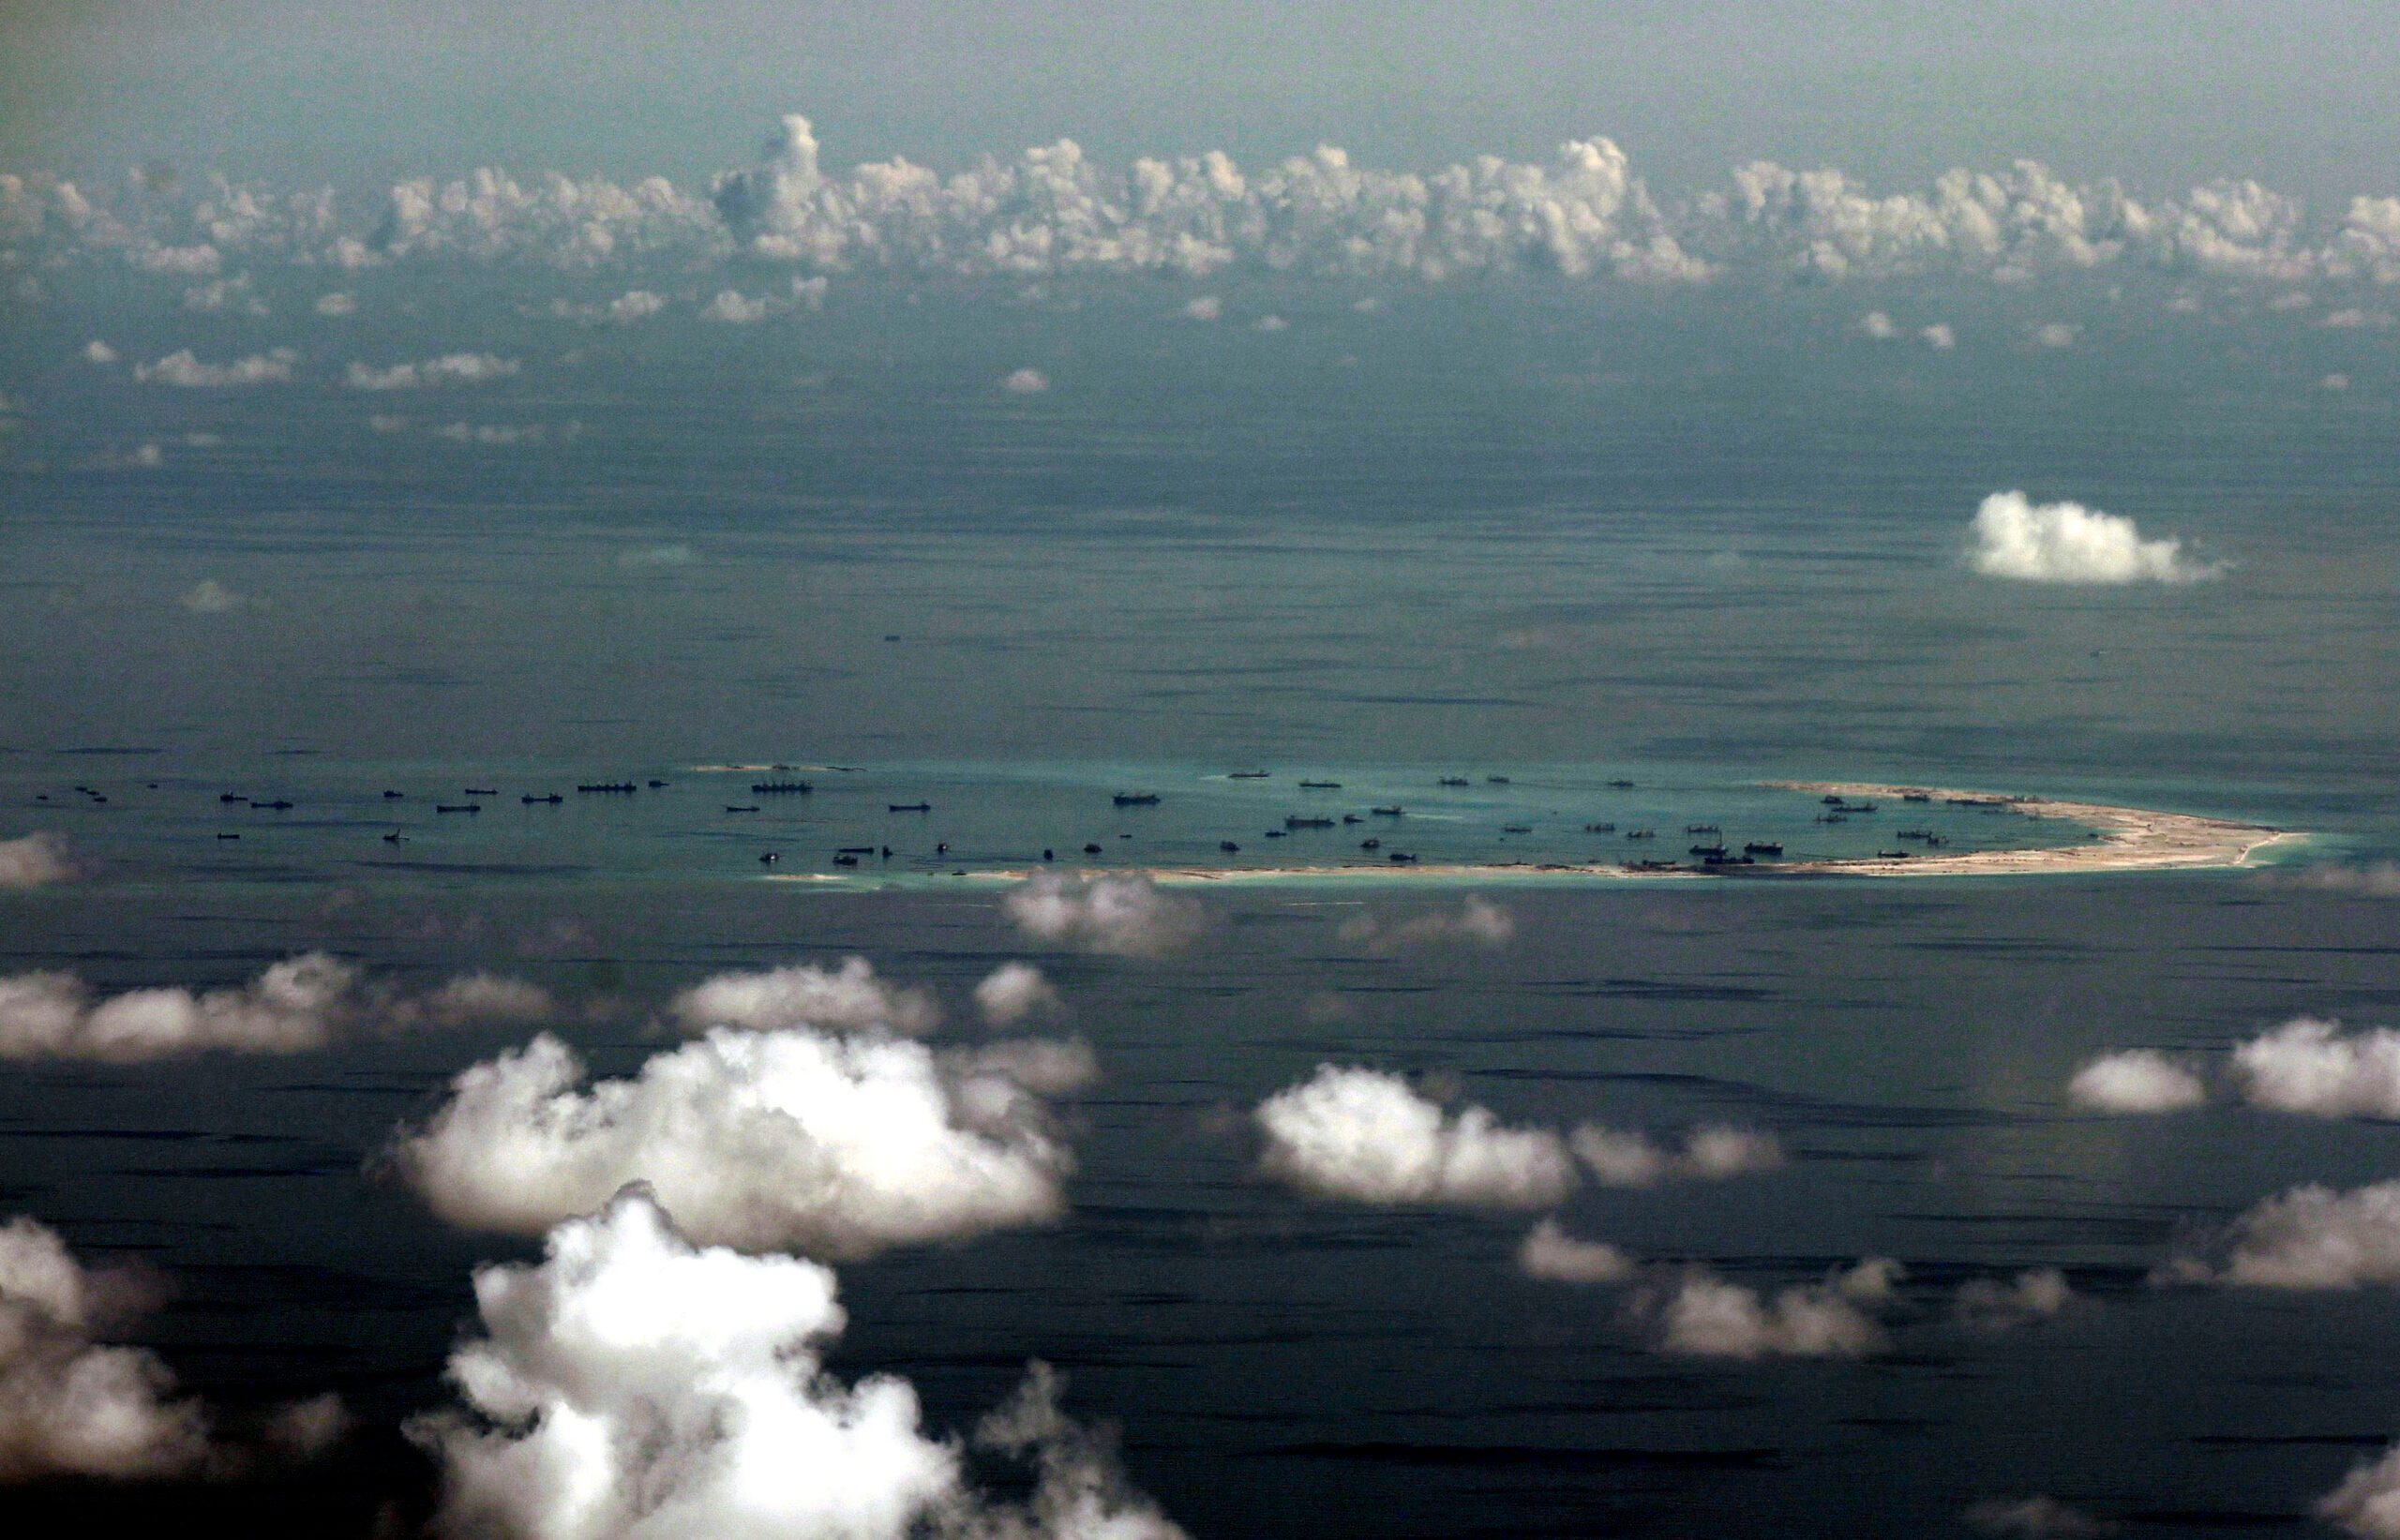 EU: End militarization of South China Sea